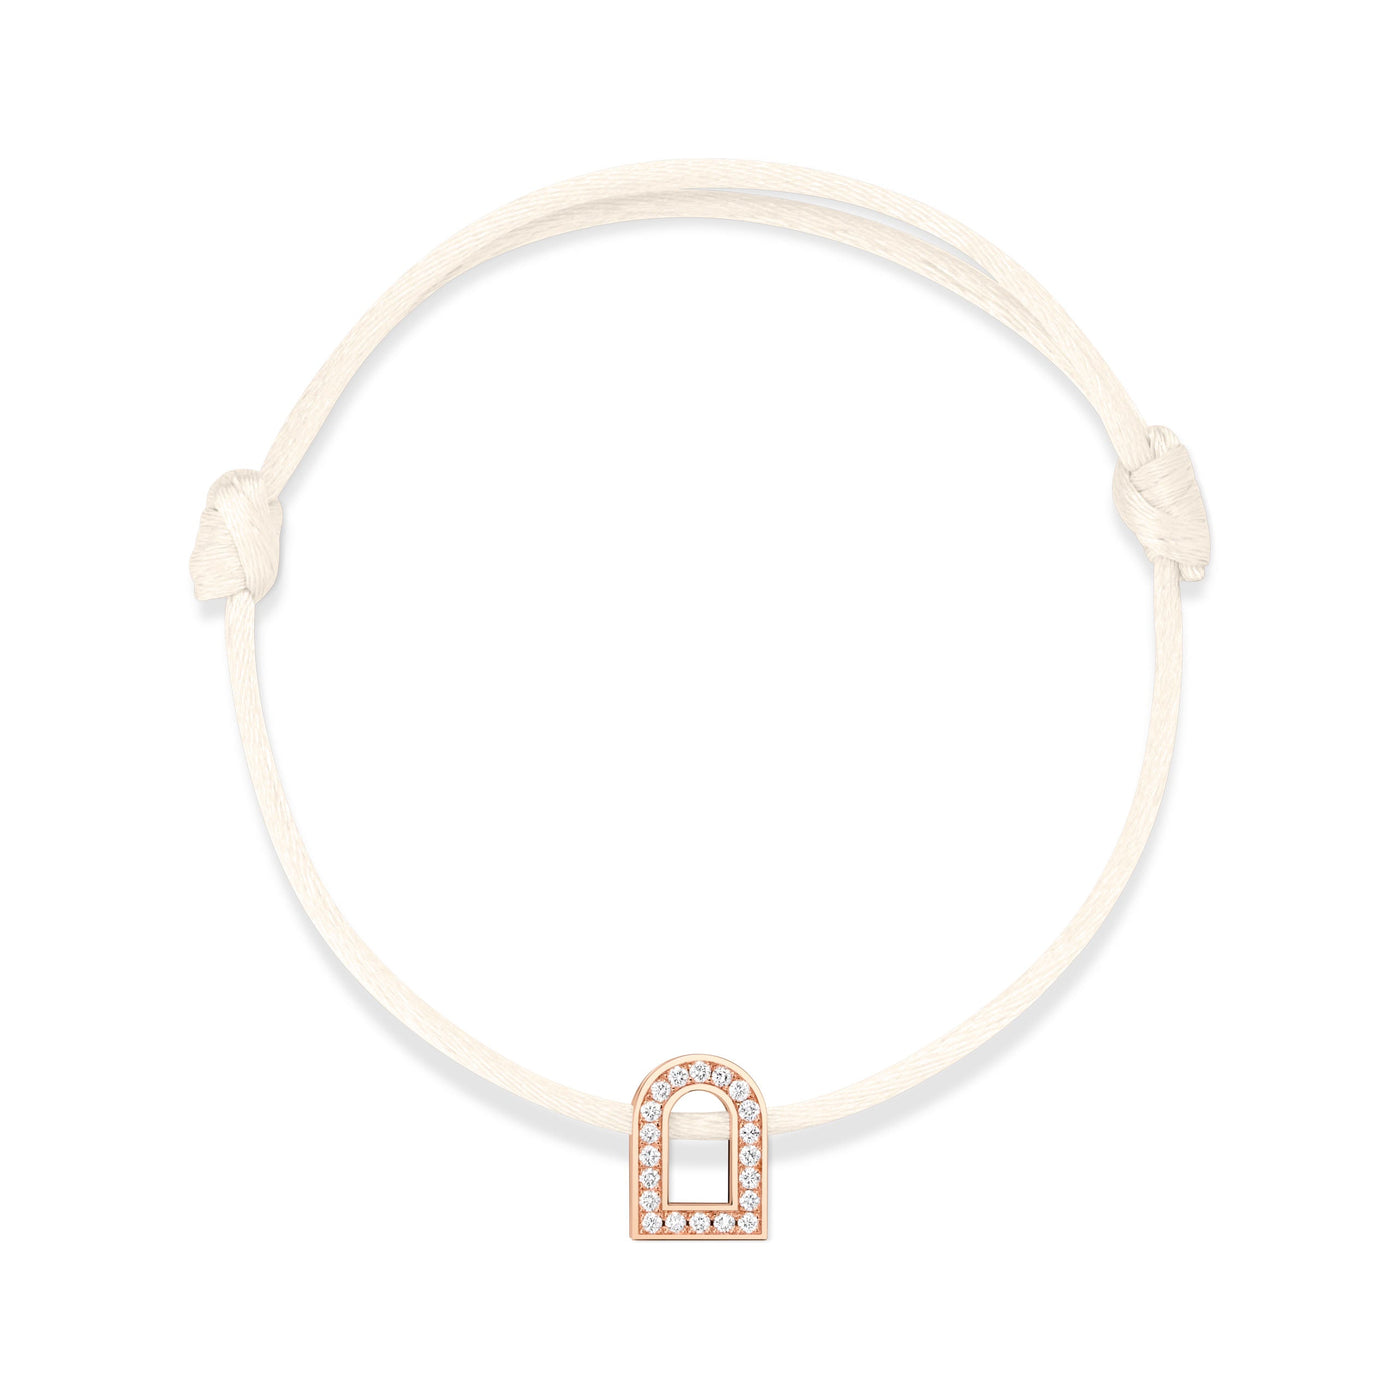 L'Arc Voyage Charm PM, 18k Rose Gold with Galerie Diamonds on Silk Cord Bracelet - DAVIDOR